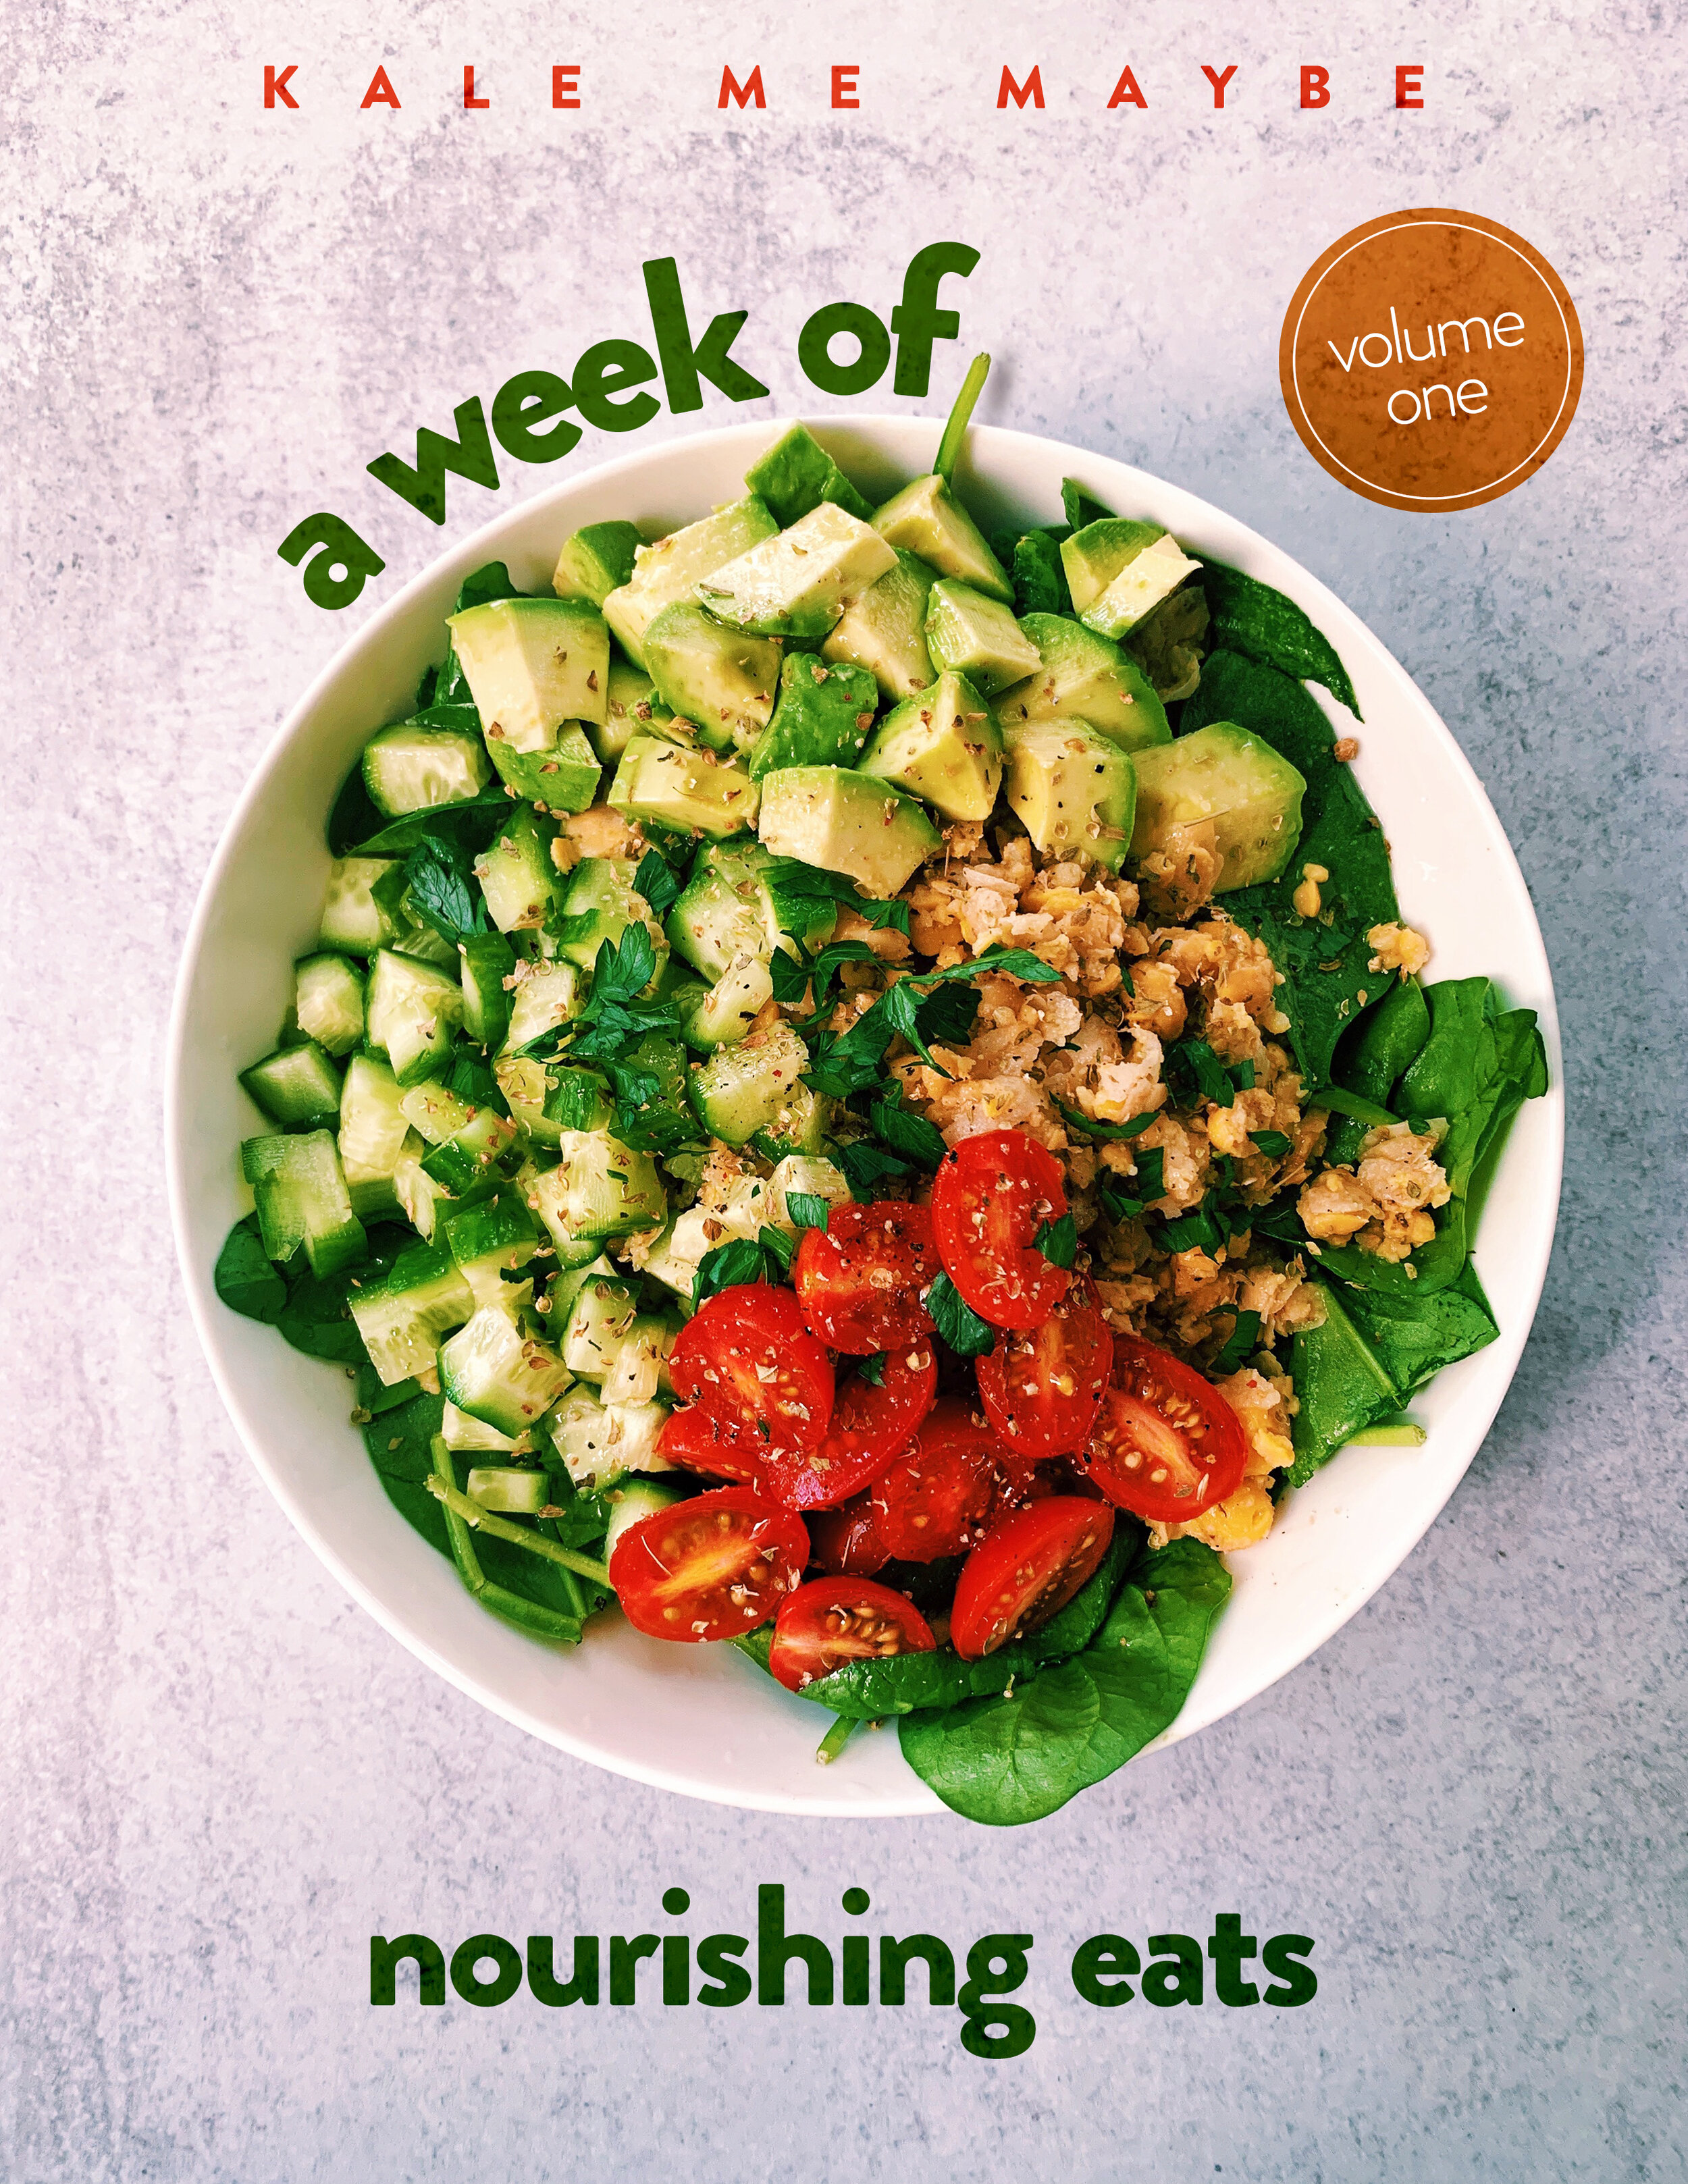 A Week of Nourishing Eats - Kale Me Maybe